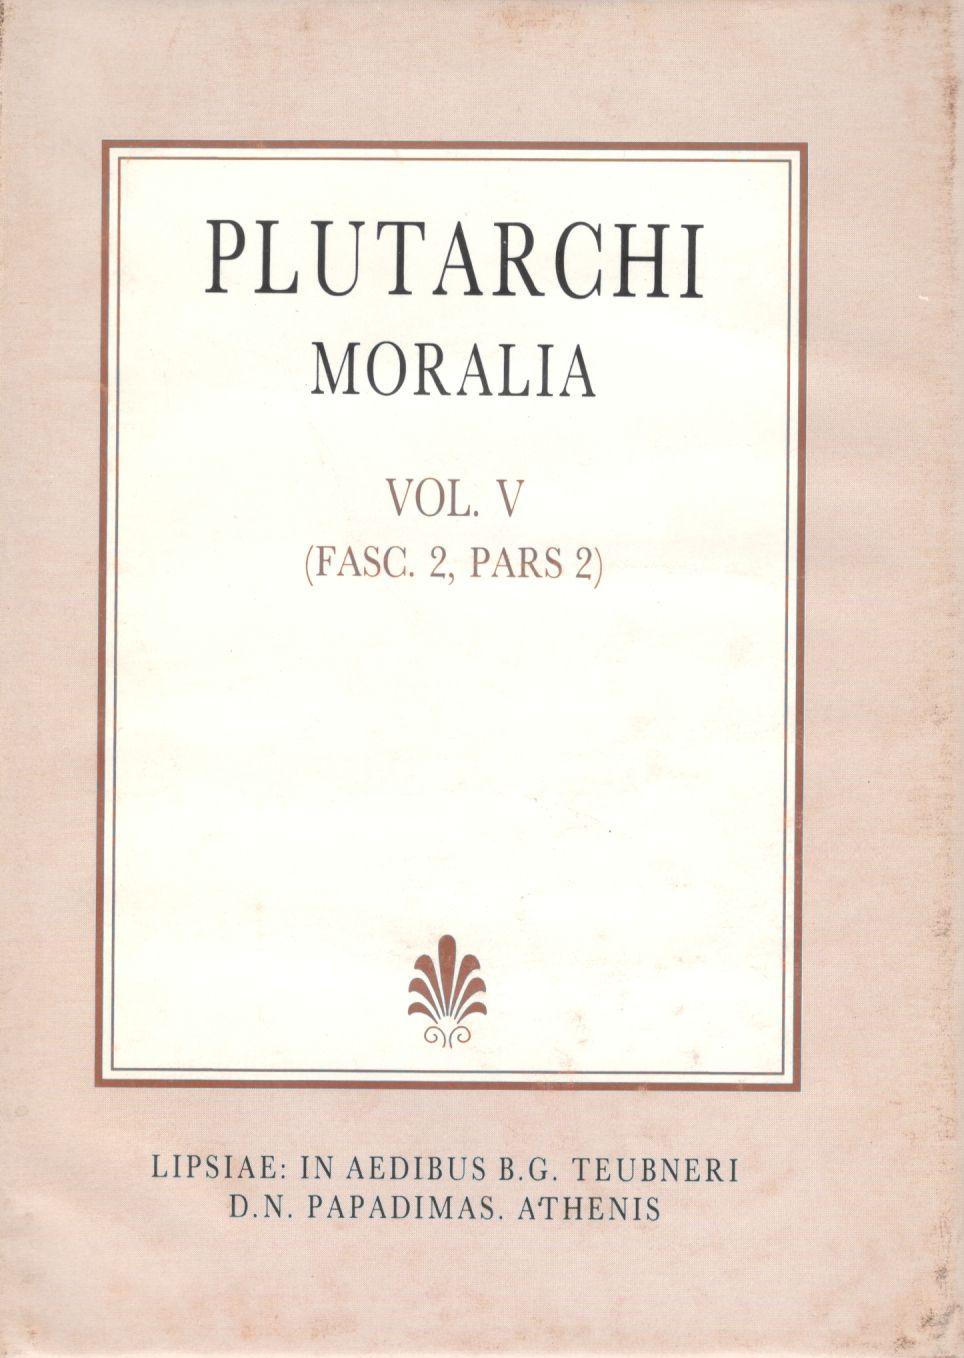 Plutarchi Moralia, Vol. V, (Fasc. 2, Pars 2), [Πλουτάρχου, Ηθικά, τ. Ε', (τεύχ. 2, μέρ. 2)]